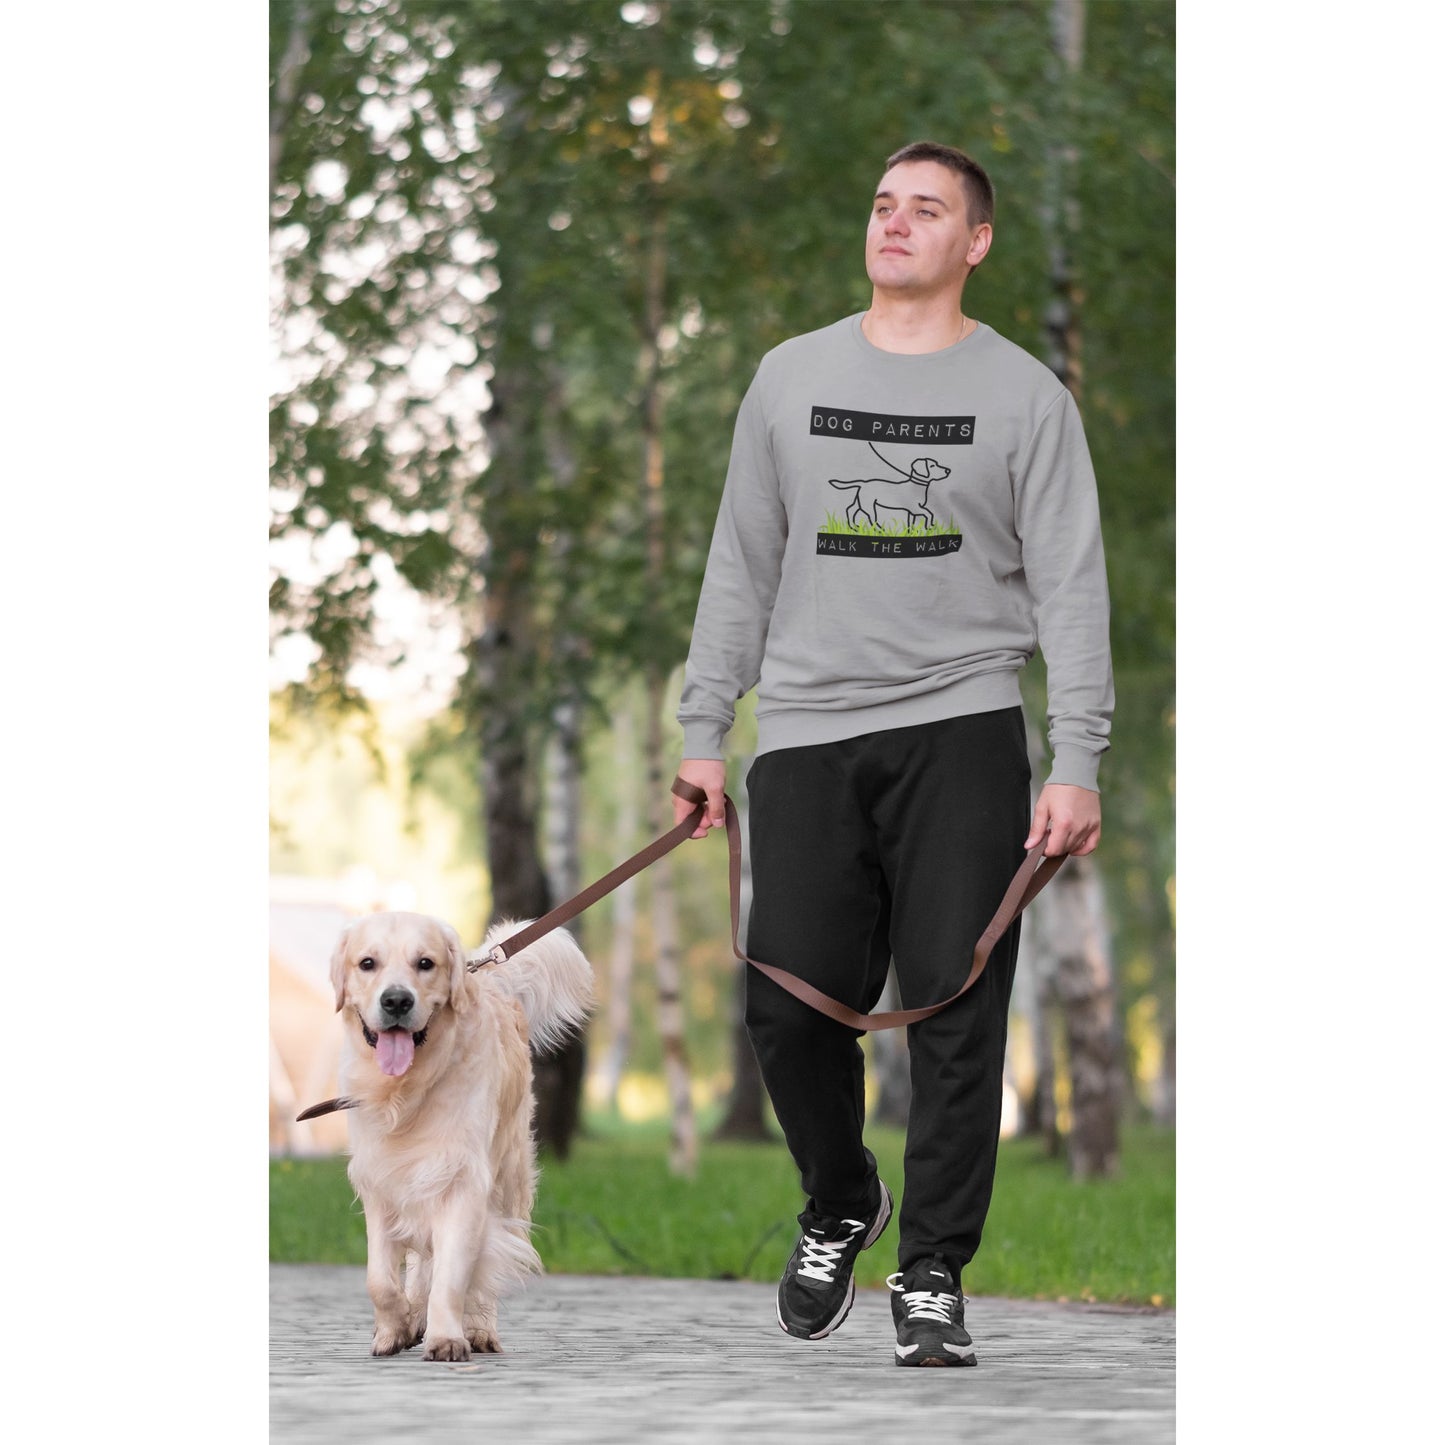 Dog Parents Walk The Walk Unisex Heavy Blend™ Crewneck Sweatshirt